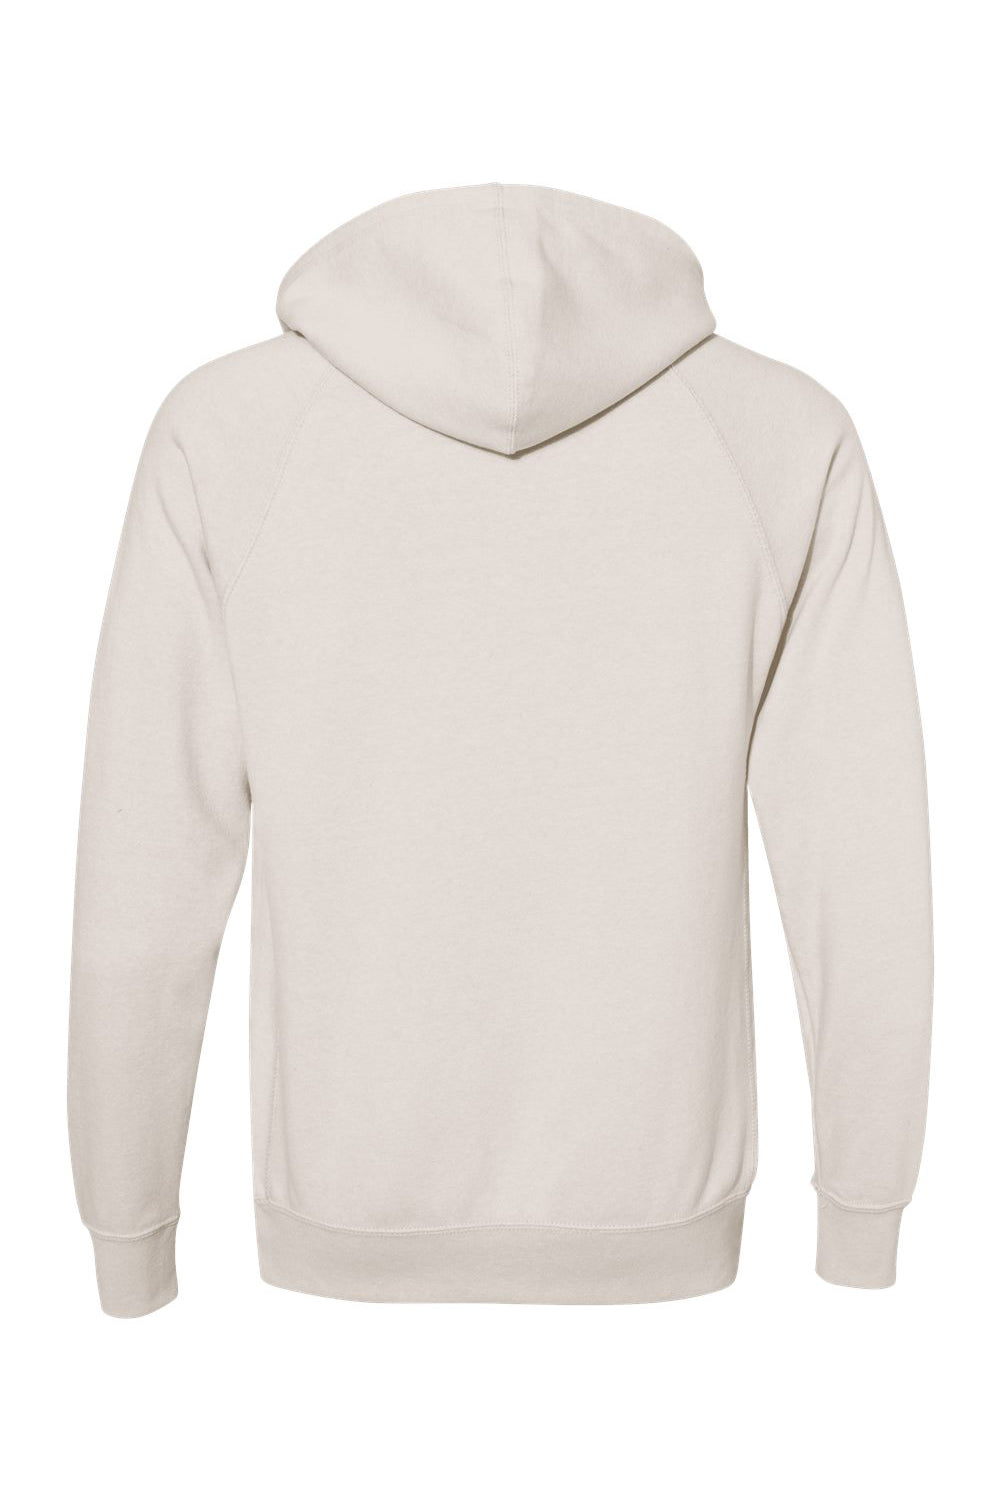 Independent Trading Co. PRM33SBP Mens Special Blend Raglan Hooded Sweatshirt Hoodie Heather Stone Flat Back